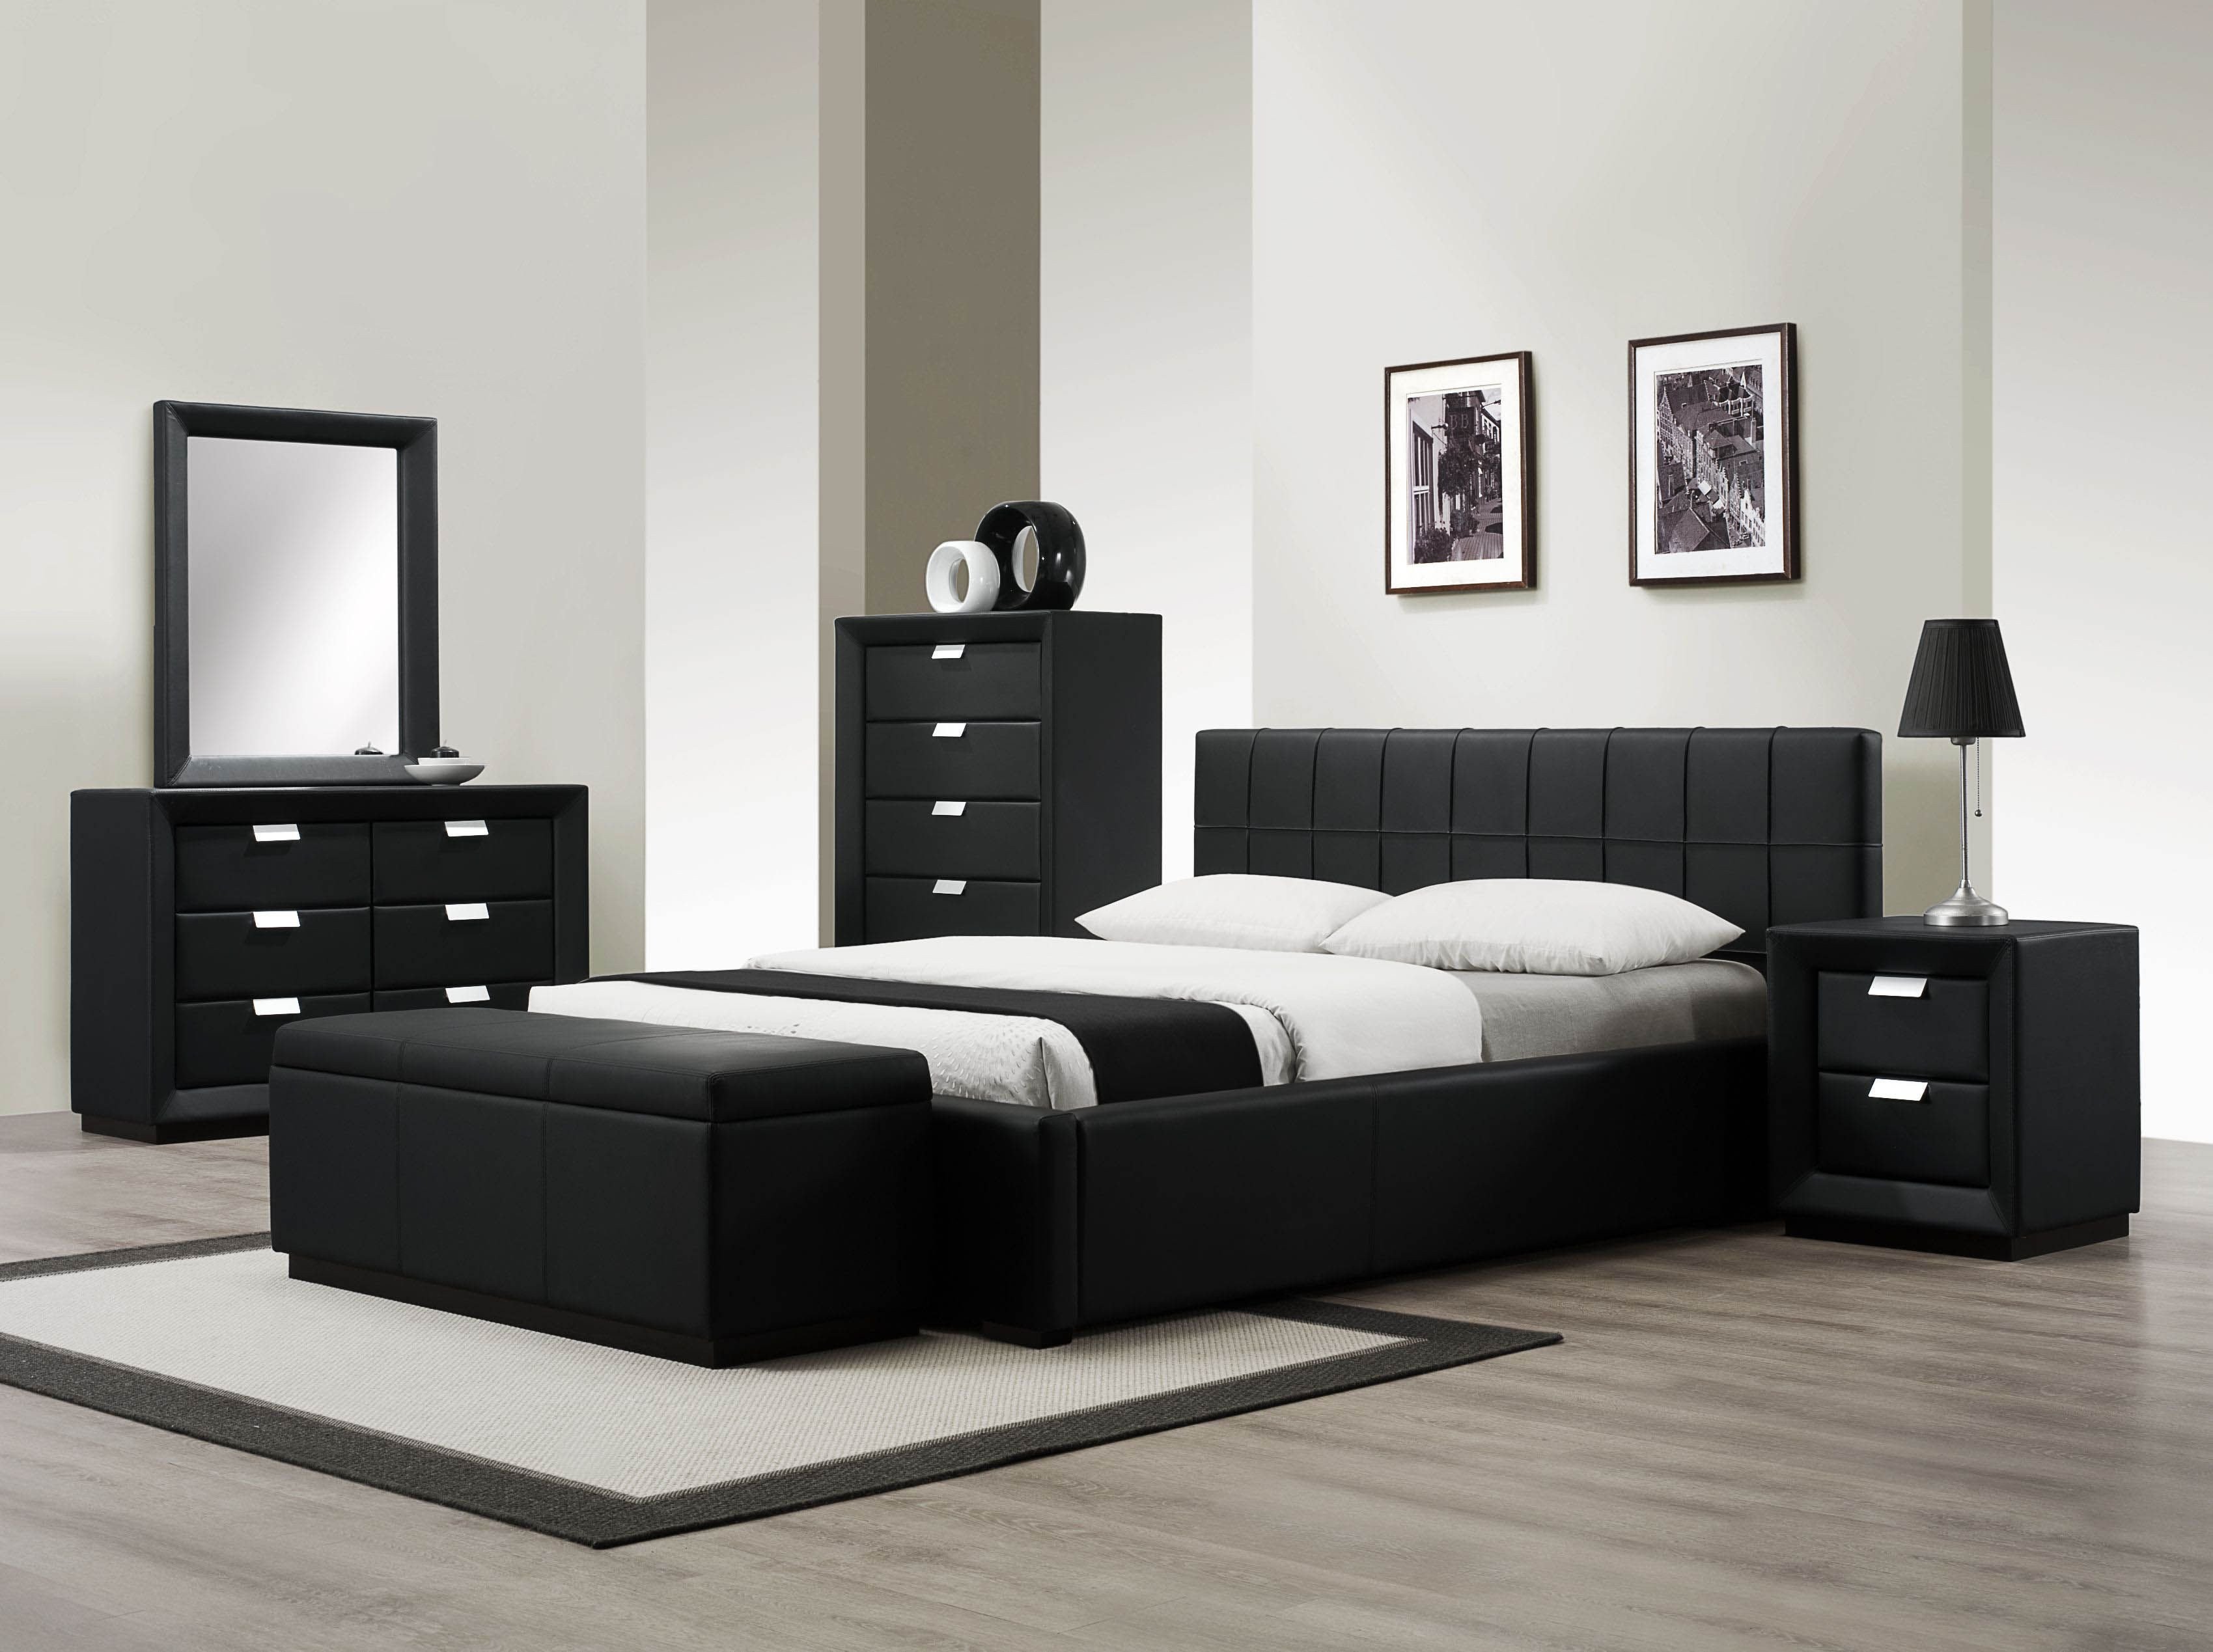 Dark Wood Bedroom Set Awesome Masculine Bedroom Ideas Evoking Style Bedroom